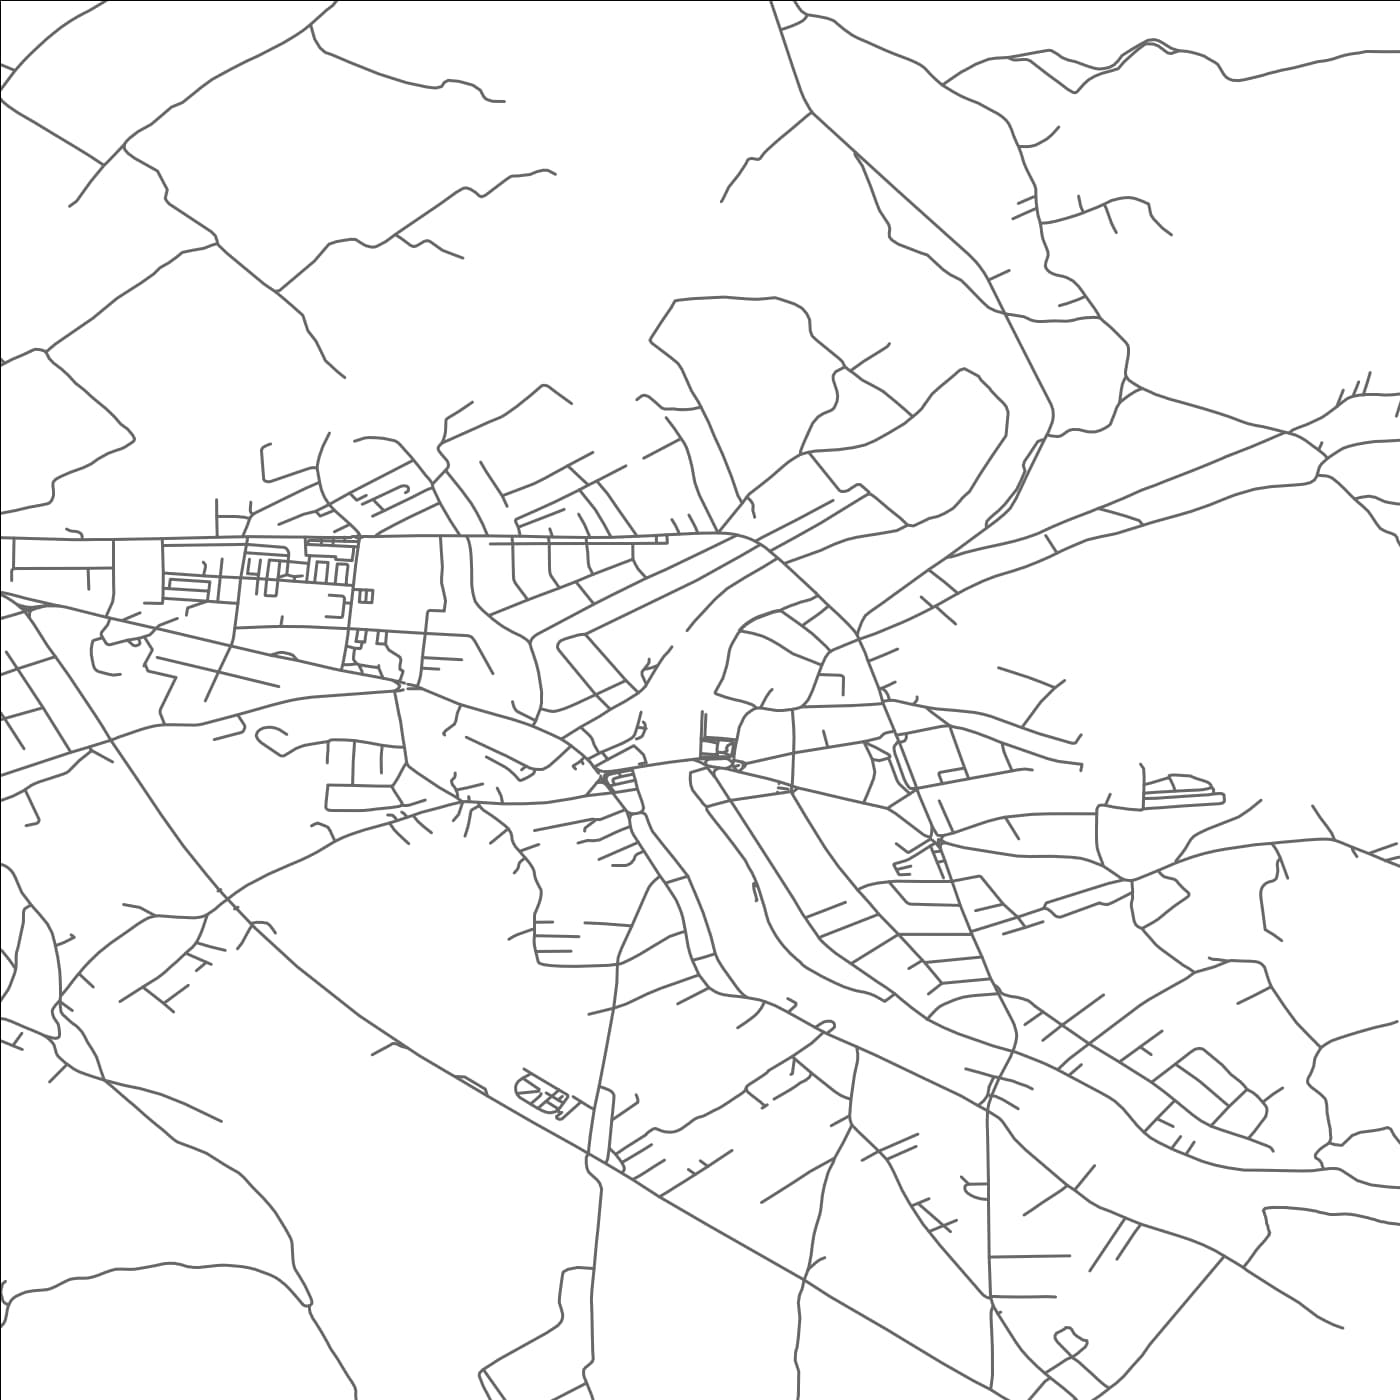 ROAD MAP OF SANSKI MOST, BOSNIA AND HERZEGOVINA BY MAPBAKES